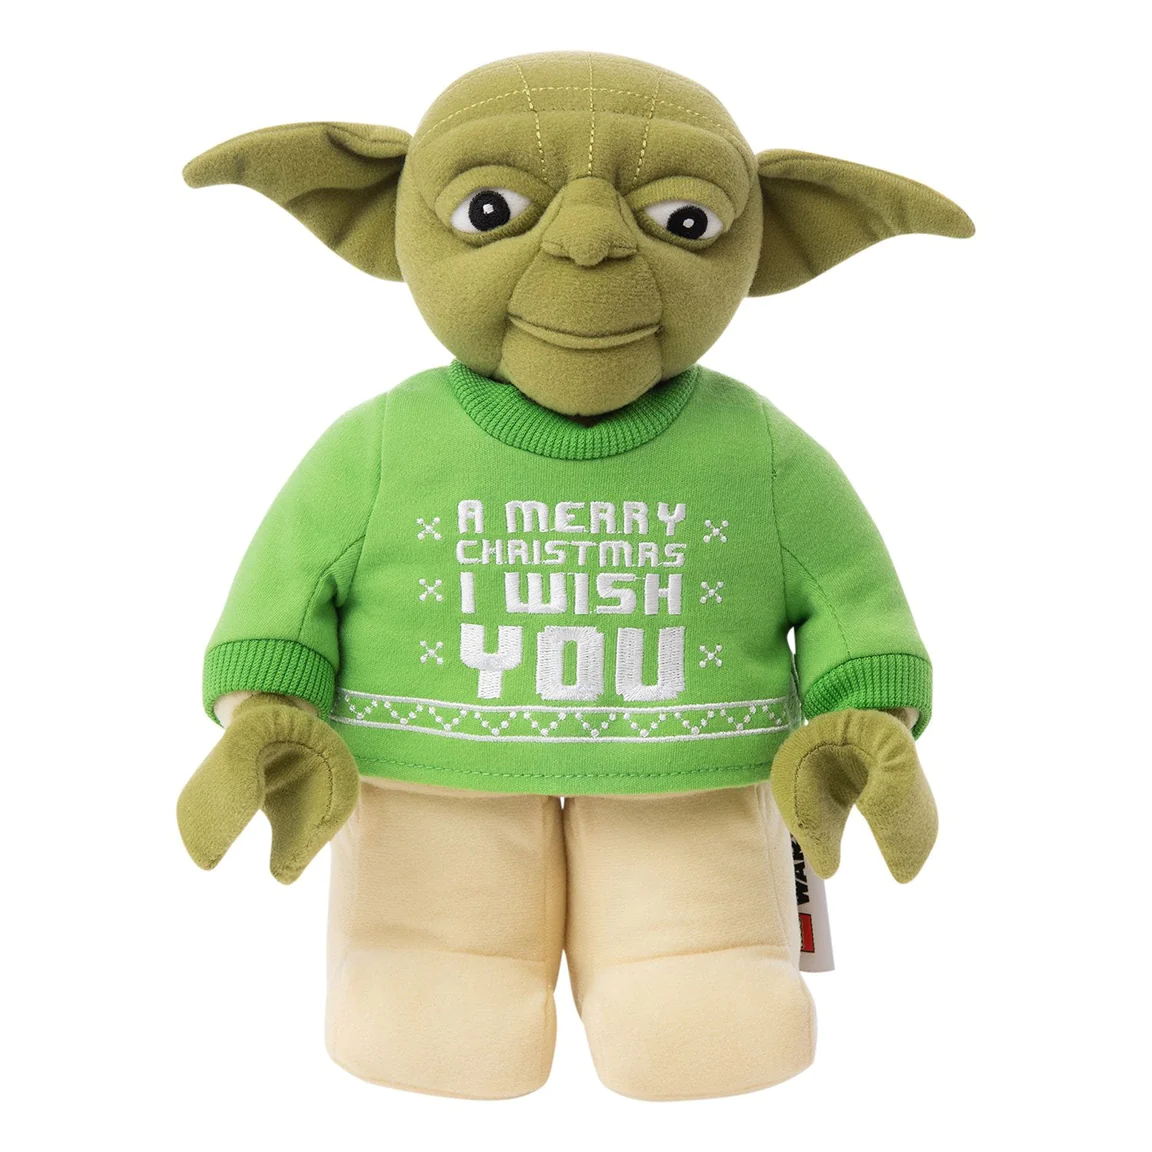 Lego Yoda Holiday Stuffed Animal